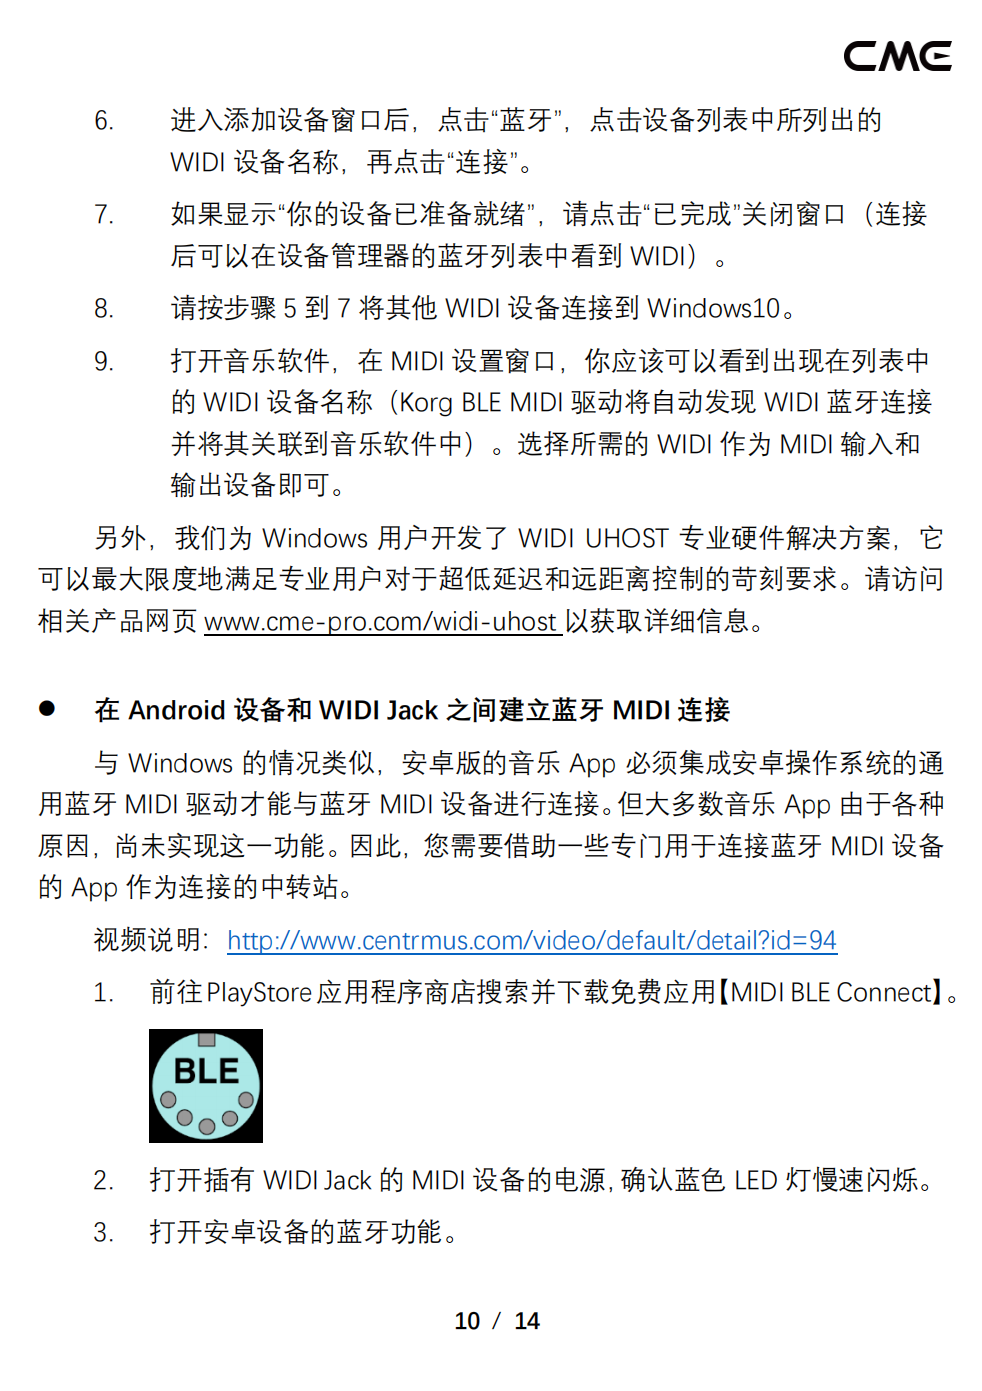 WIDI Jack Owner's manual_v06_mobile view_cn_09.png